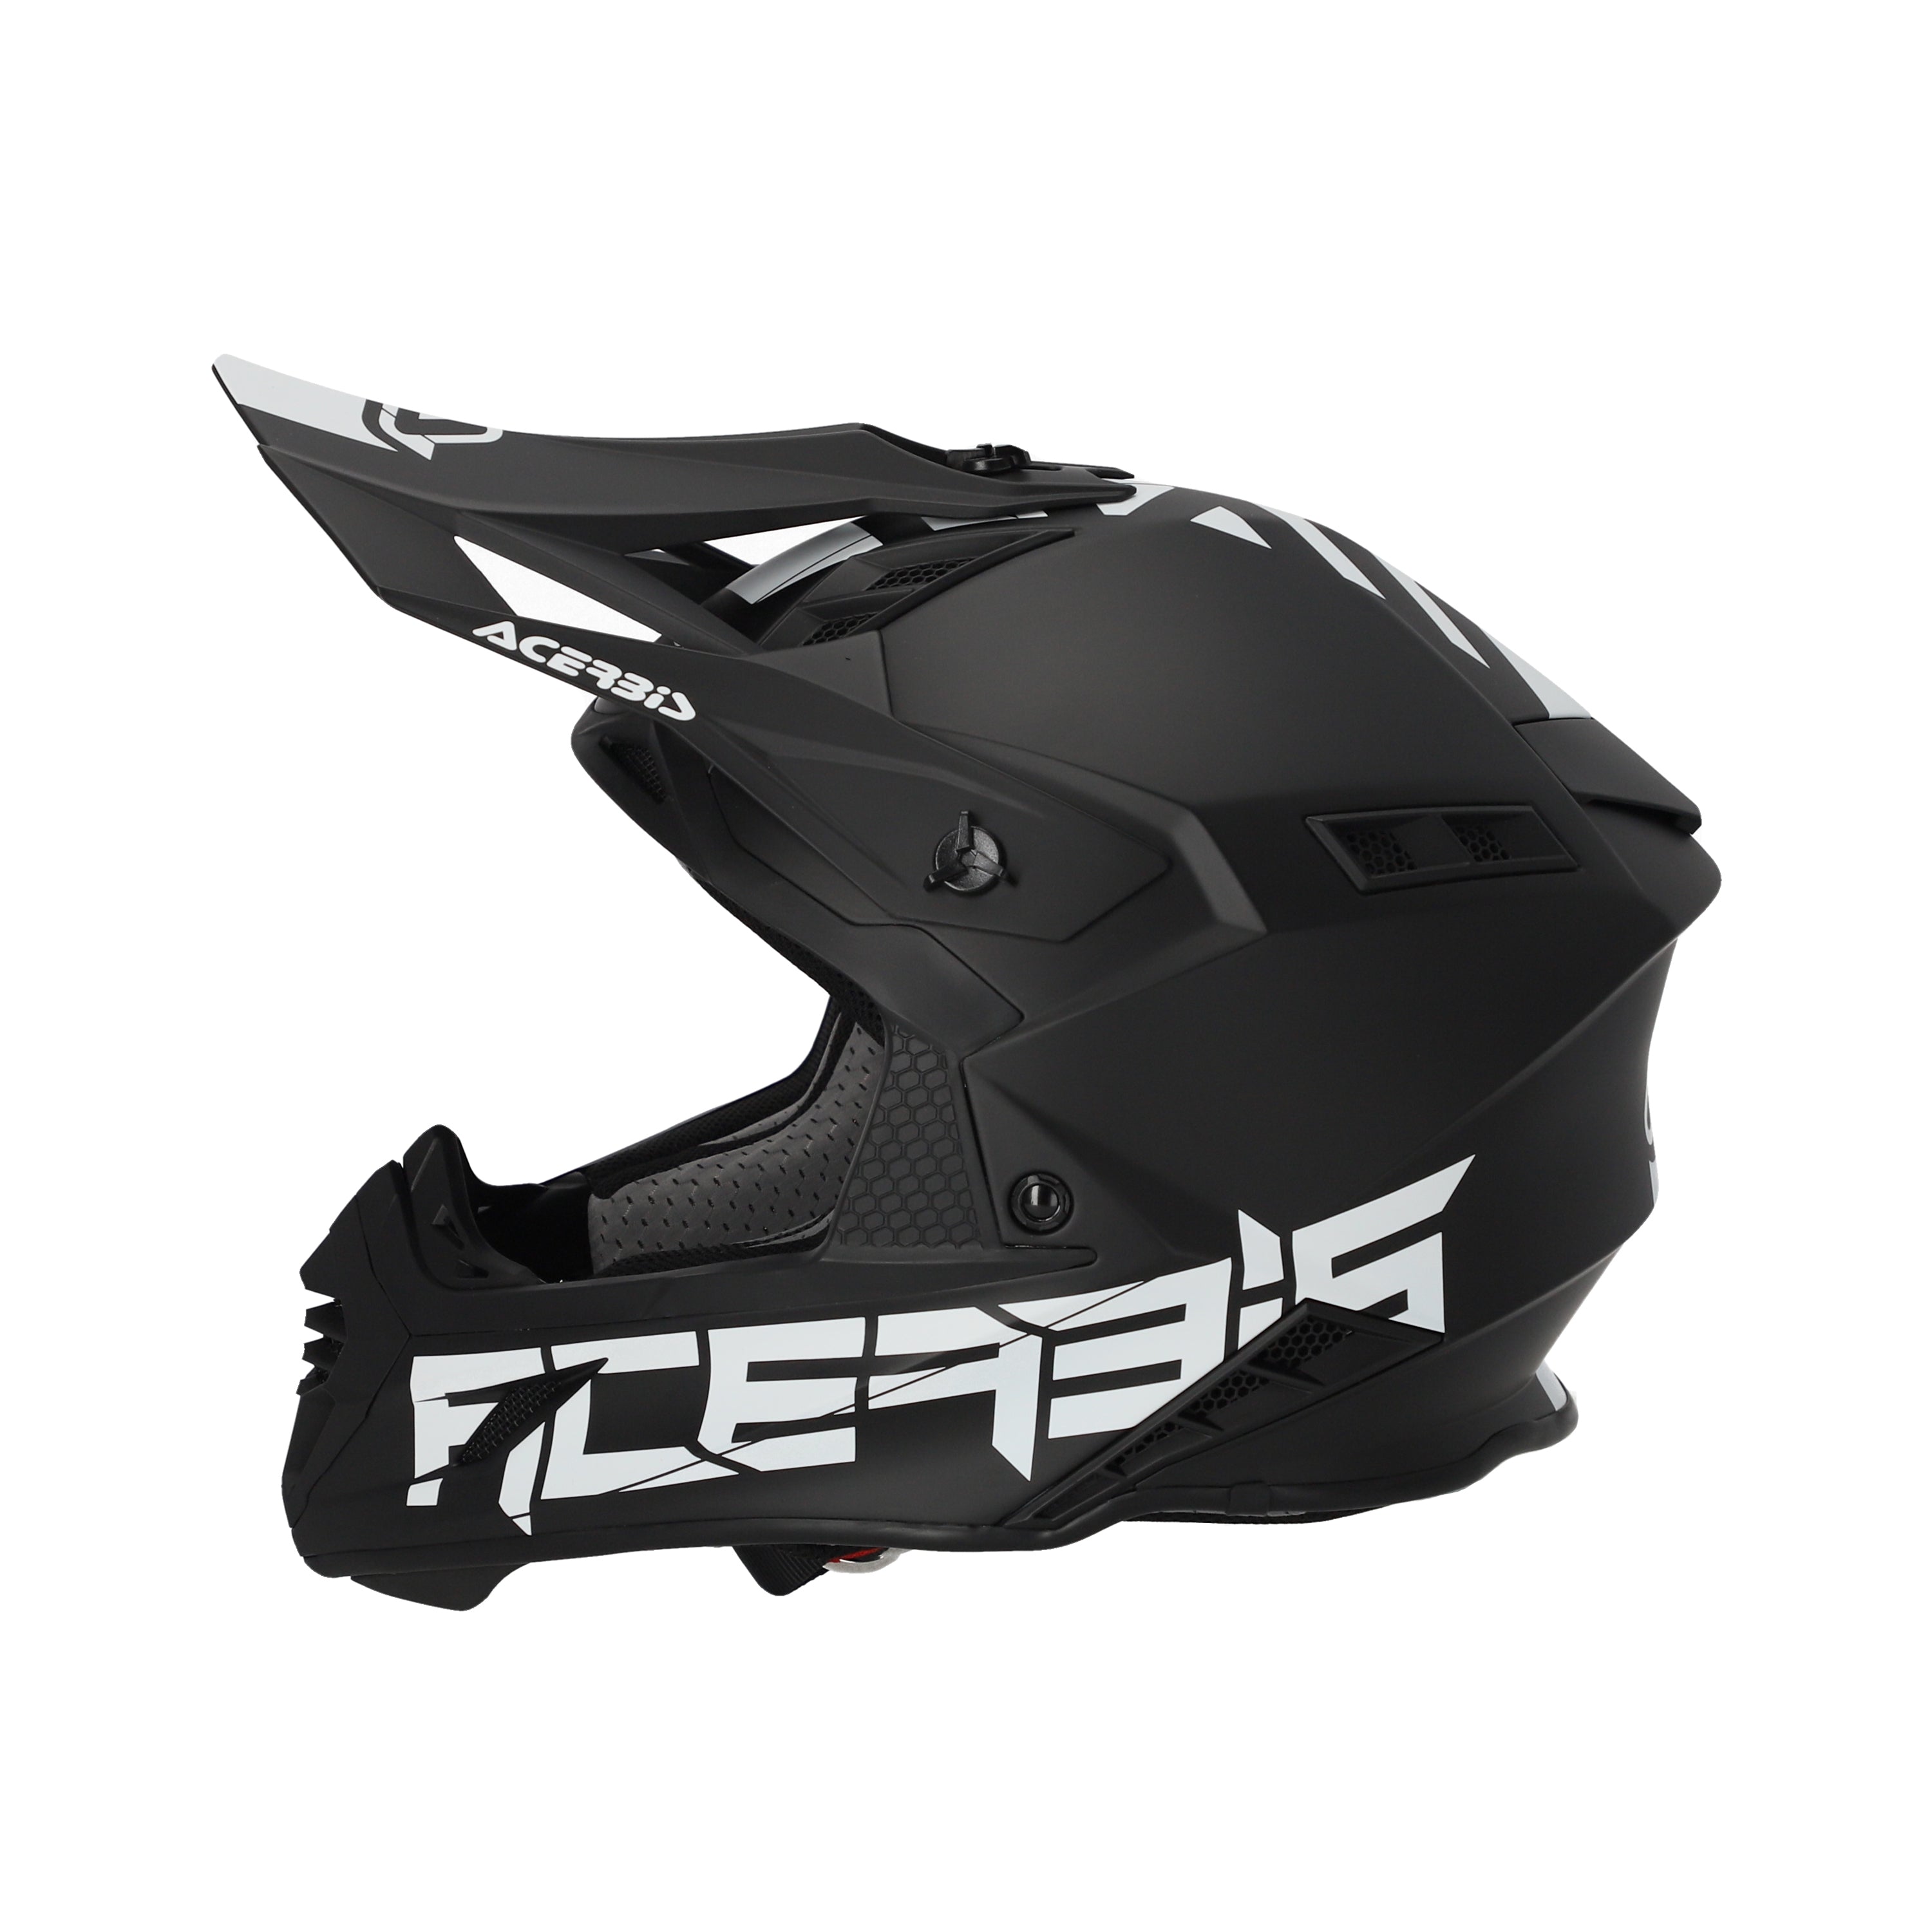 Acerbis X-Track MX Helmet Black